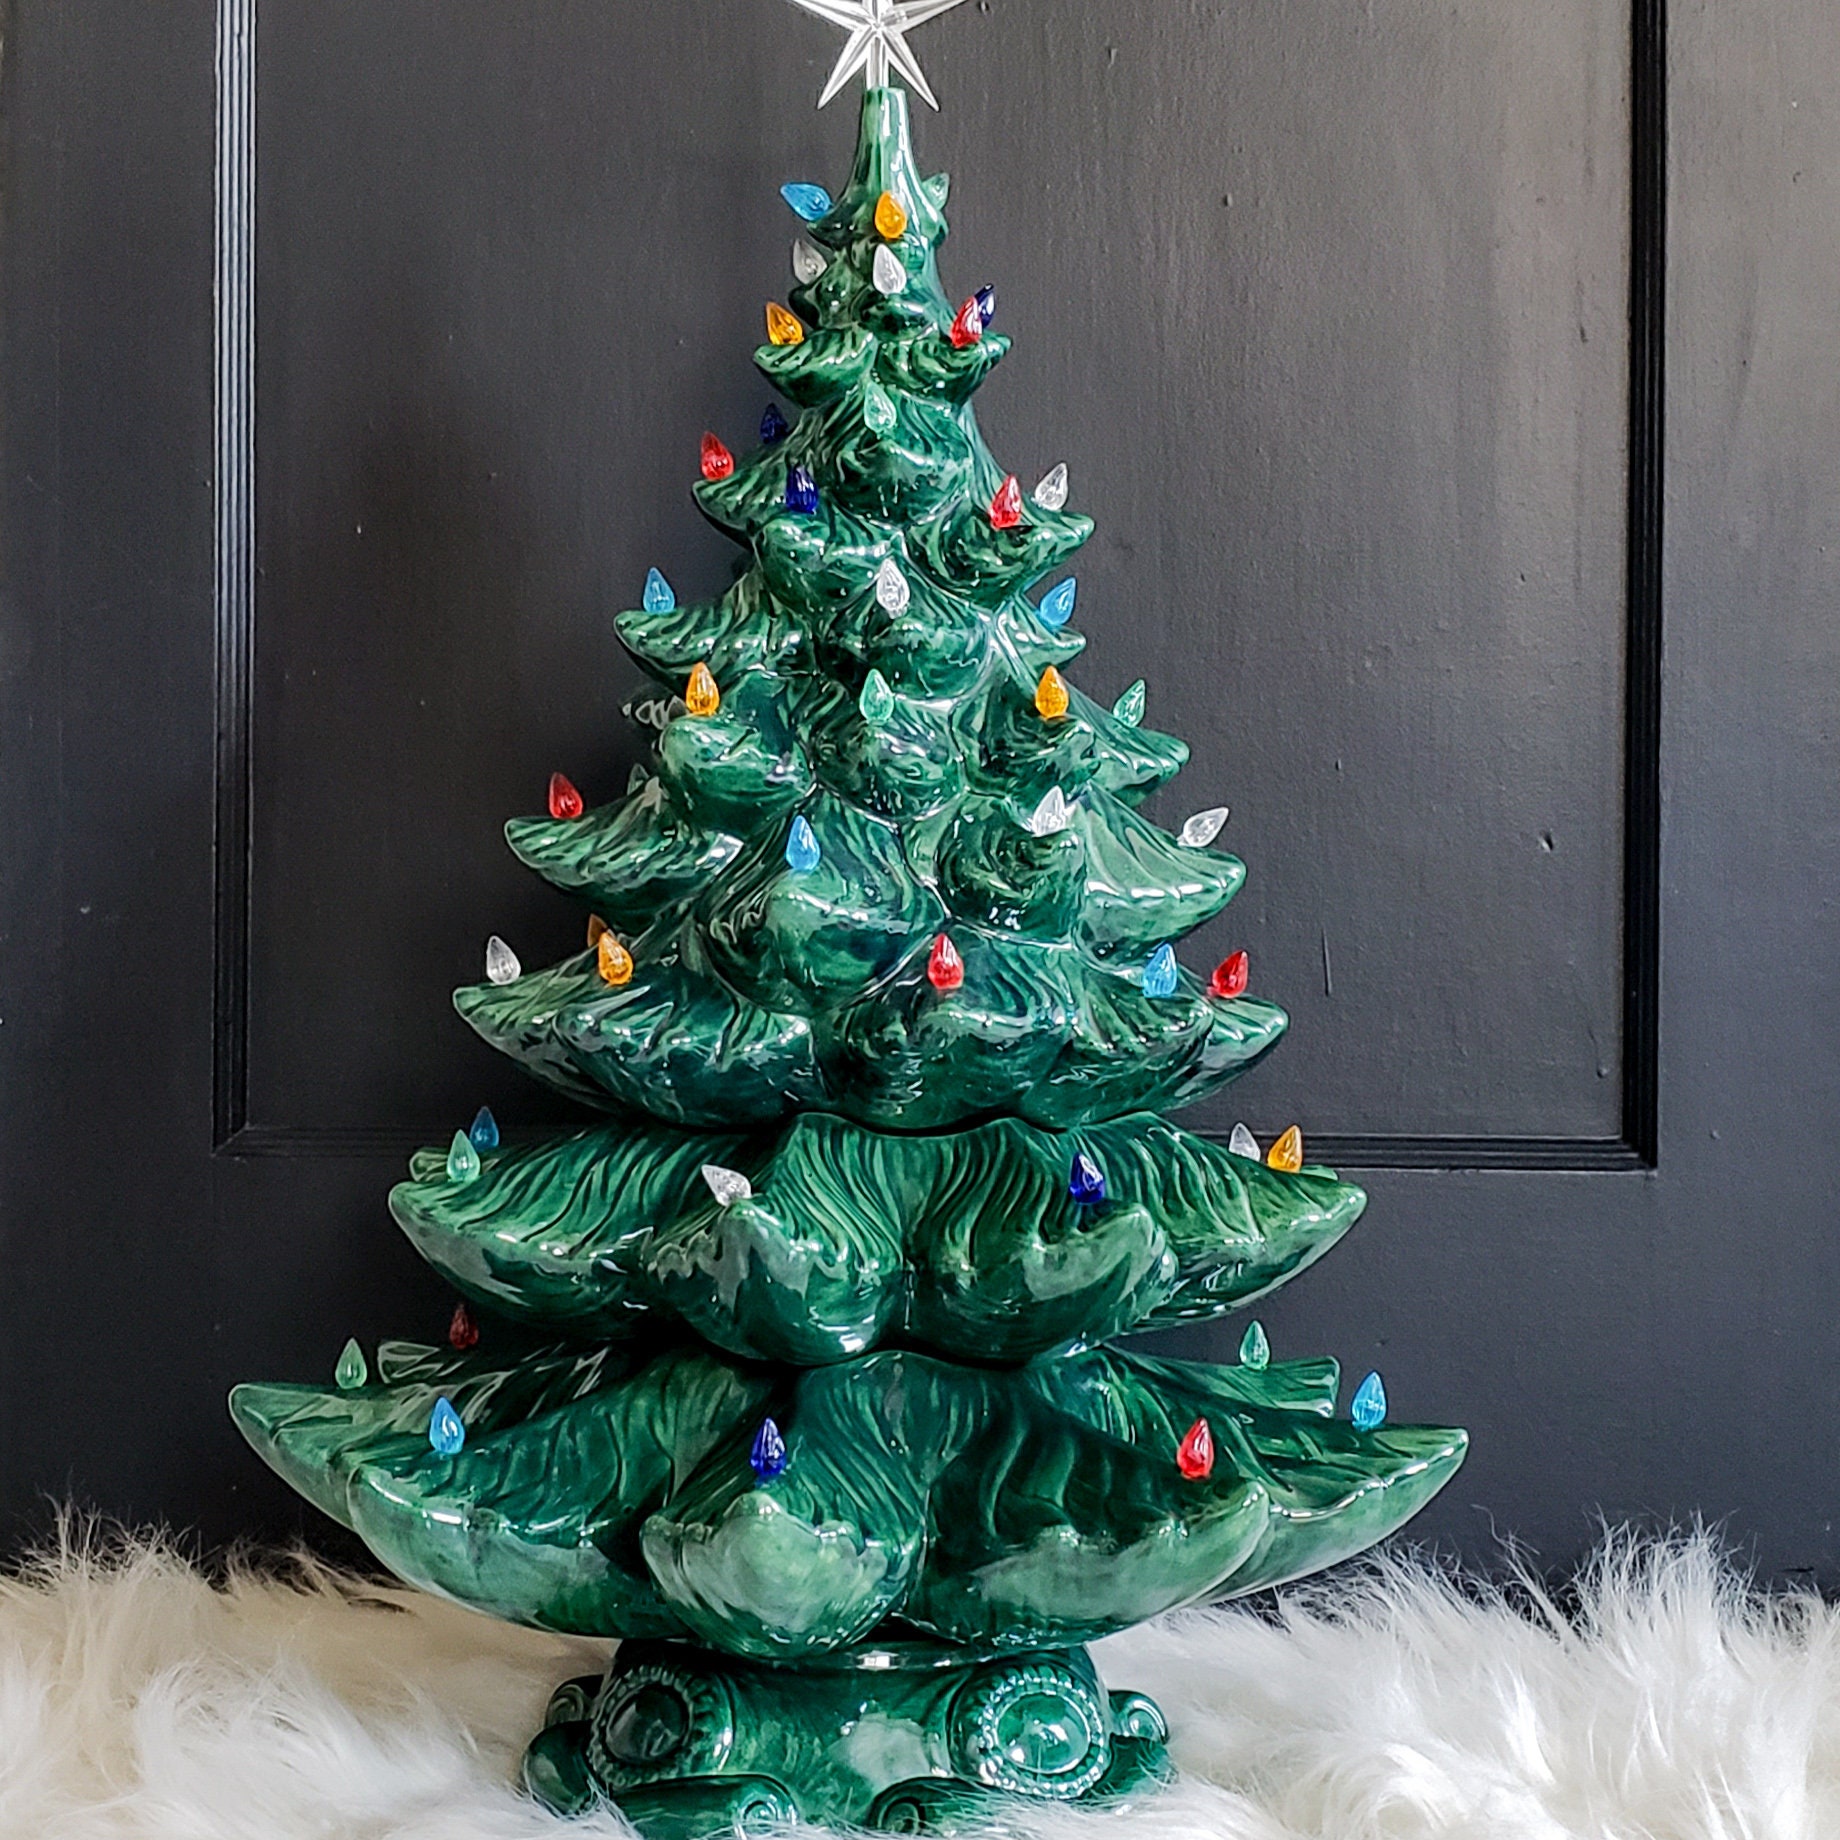 Where Can I Buy A Ceramic Christmas Tree?